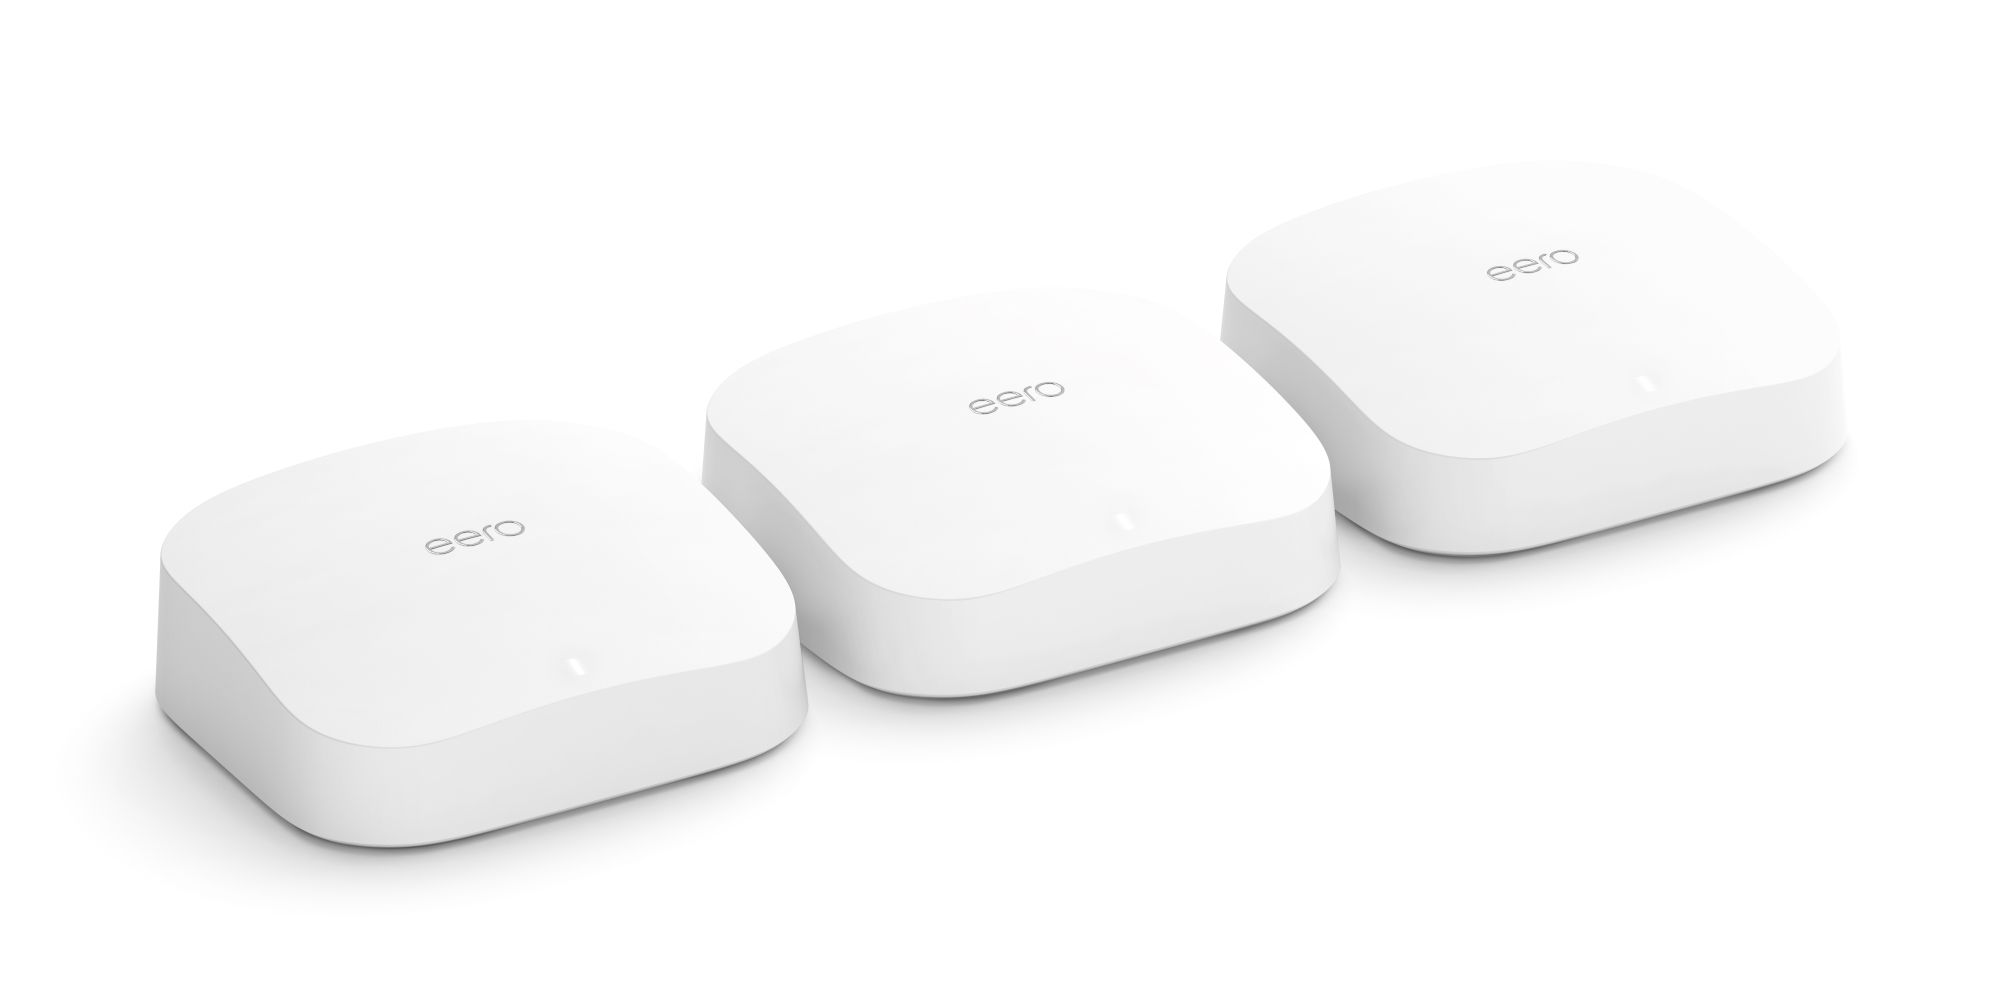 Eero 6 Vs. Eero Pro 6: Which Wi-Fi Router Should You Buy?